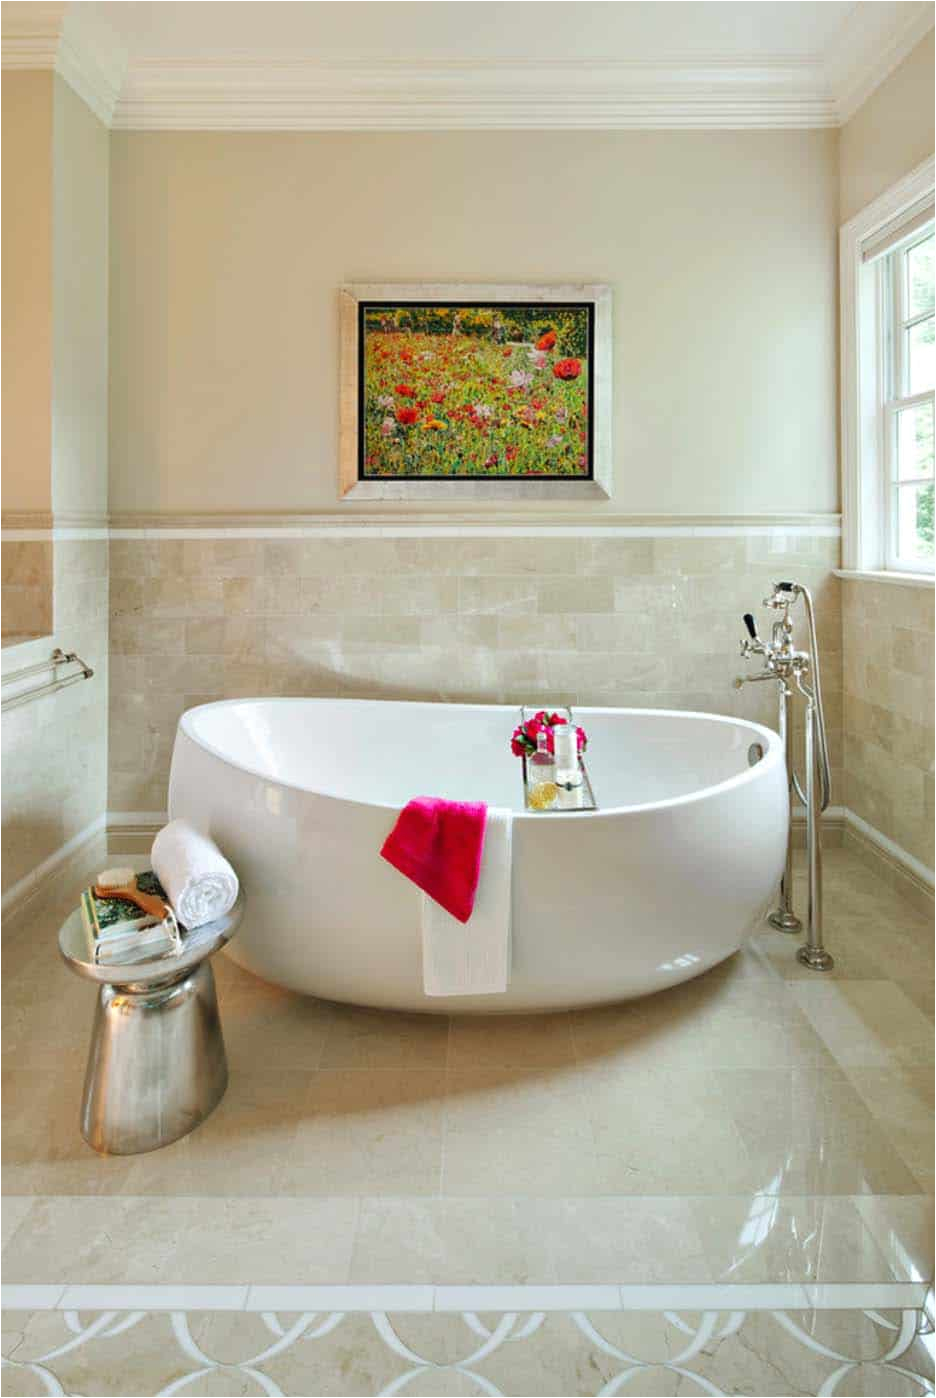 Freestanding Bathtub Images 35 Fabulous Freestanding Bathtub Ideas for A Luxurious soak